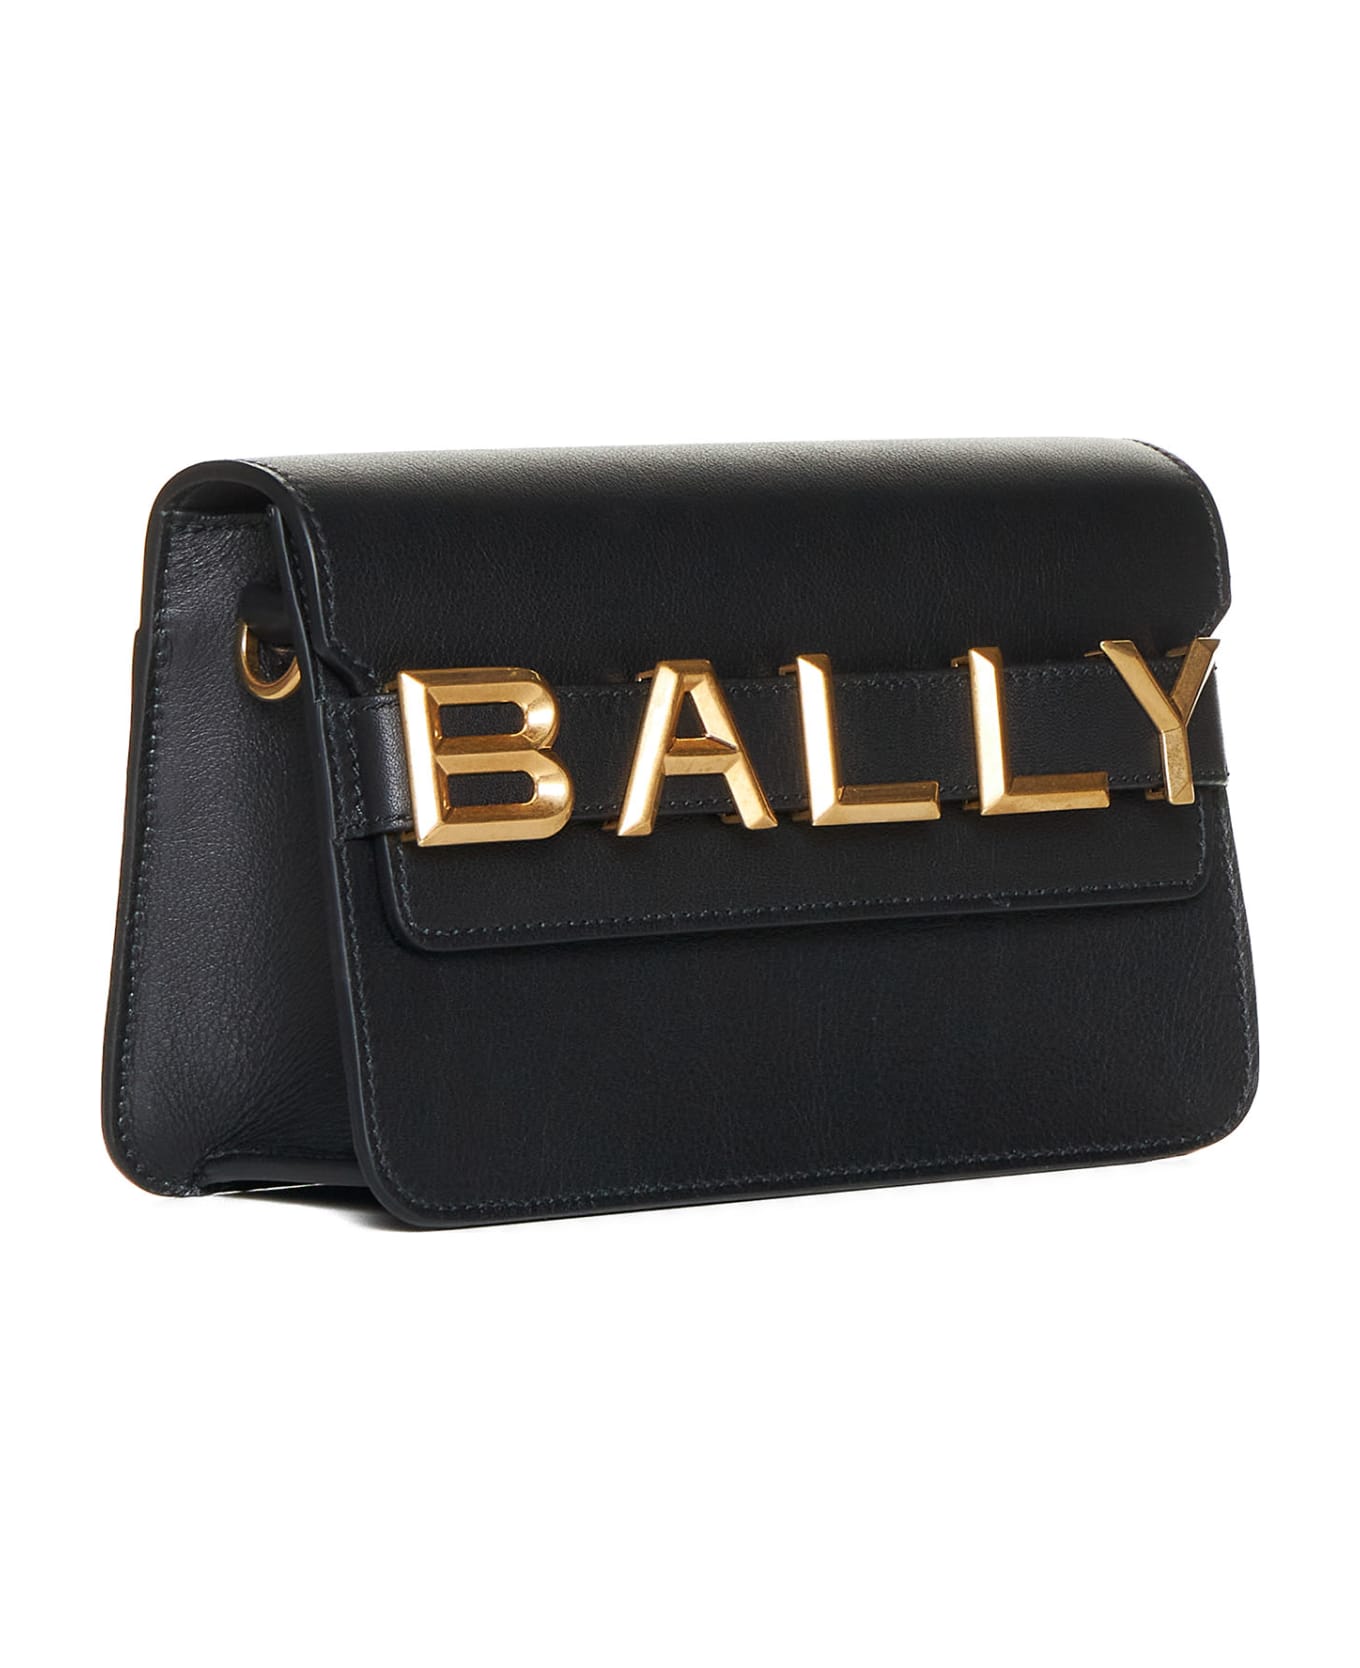 Bally Shoulder Bag - Black+oro